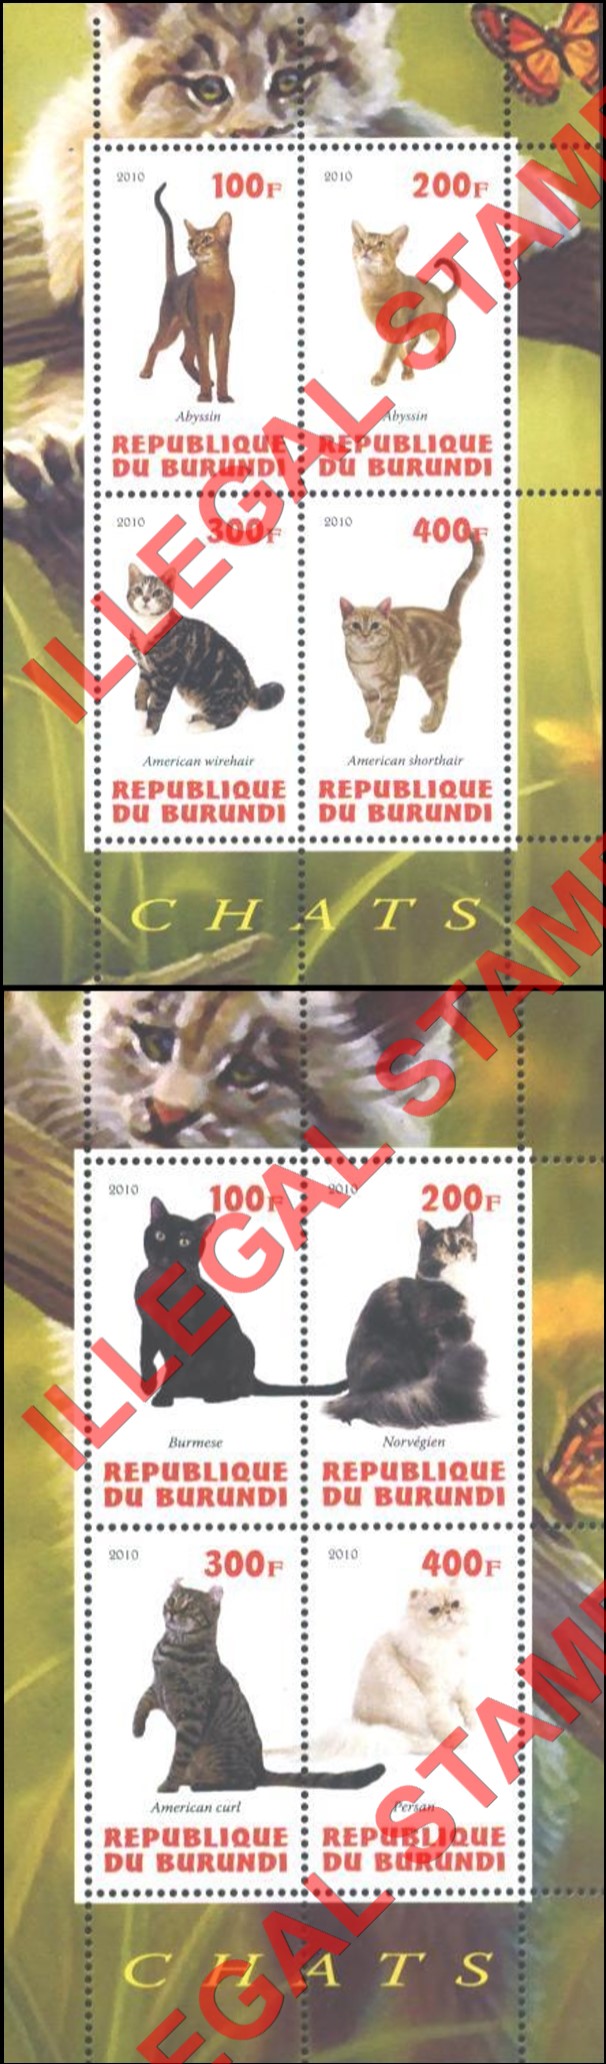 Burundi 2010 Cats Counterfeit Illegal Stamp Souvenir Sheets of 4 (Part 2)